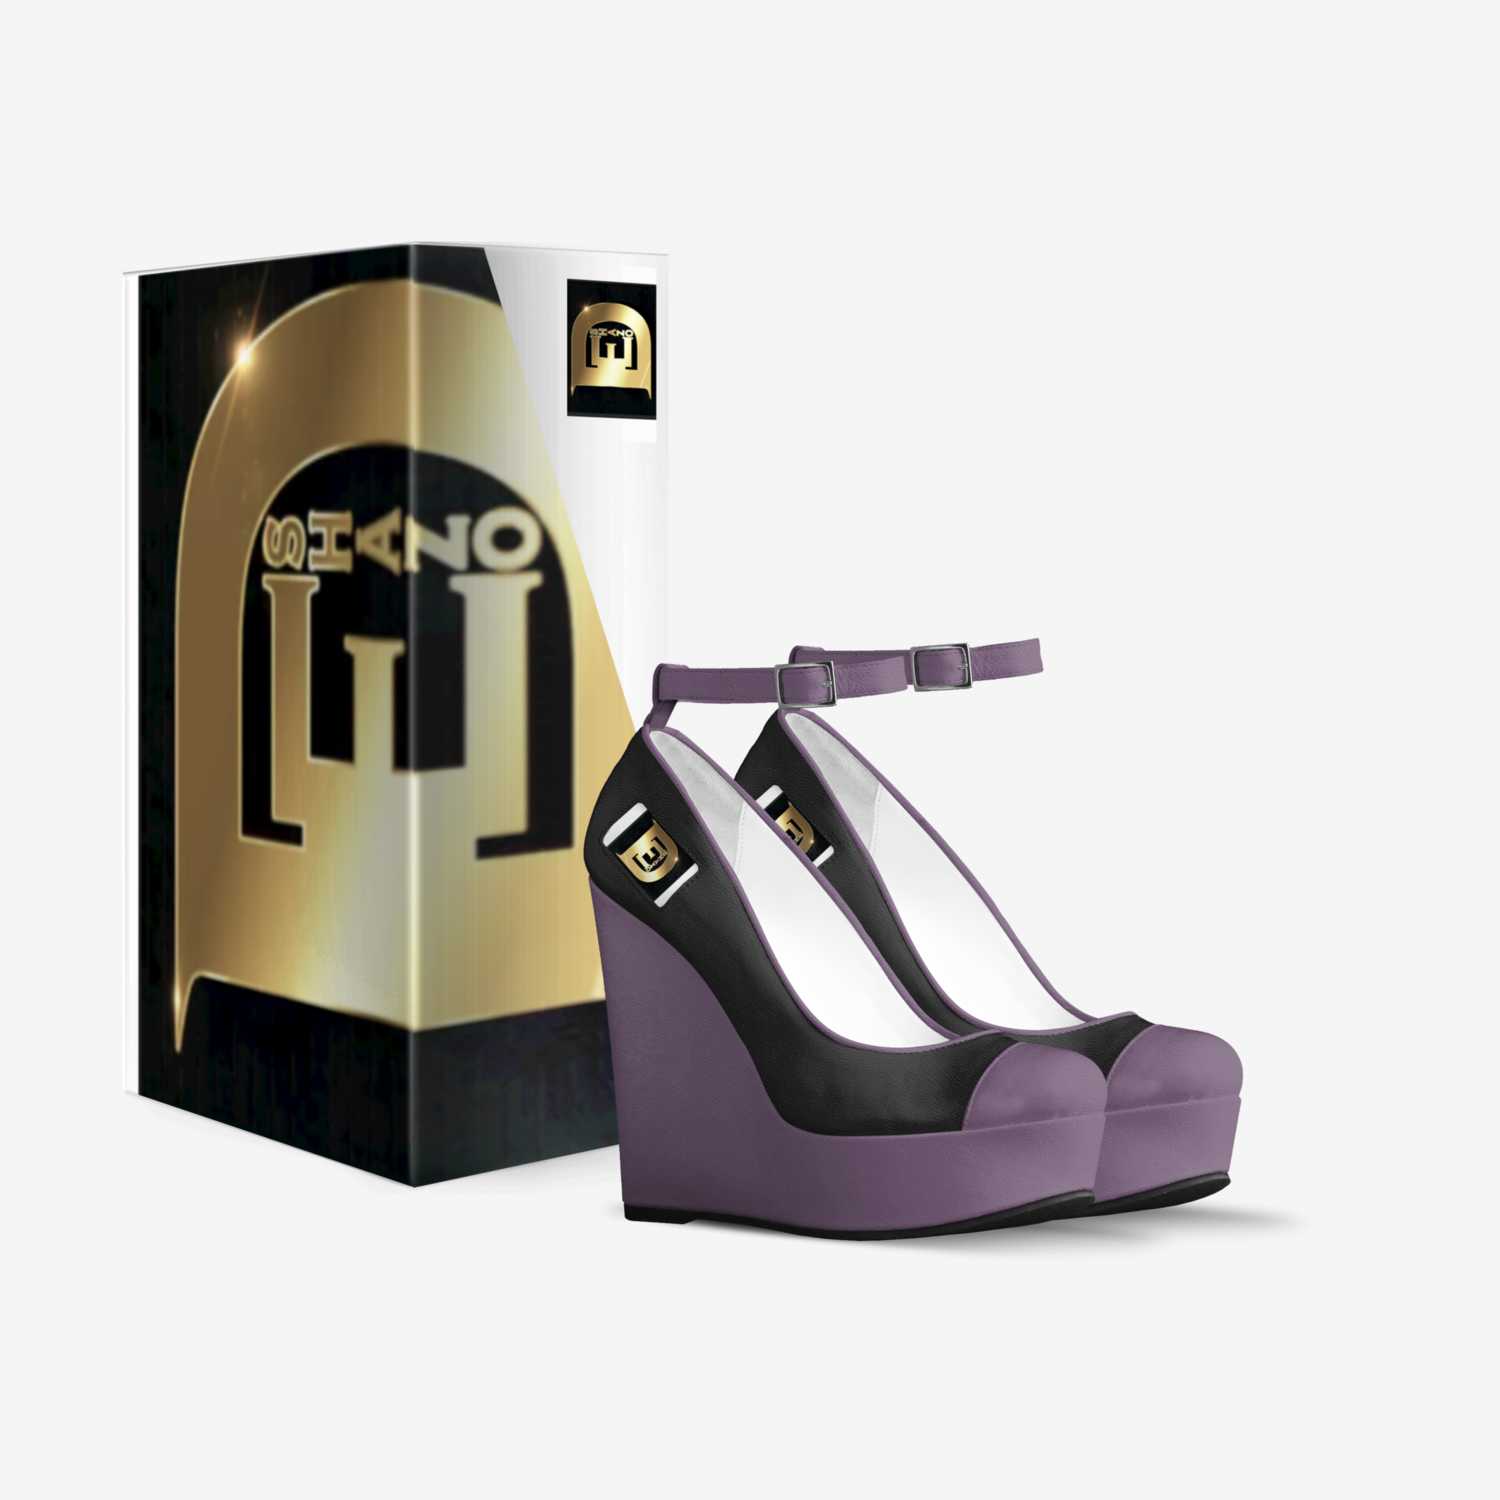 De'Shazo custom made in Italy shoes by Lashelle | Box view